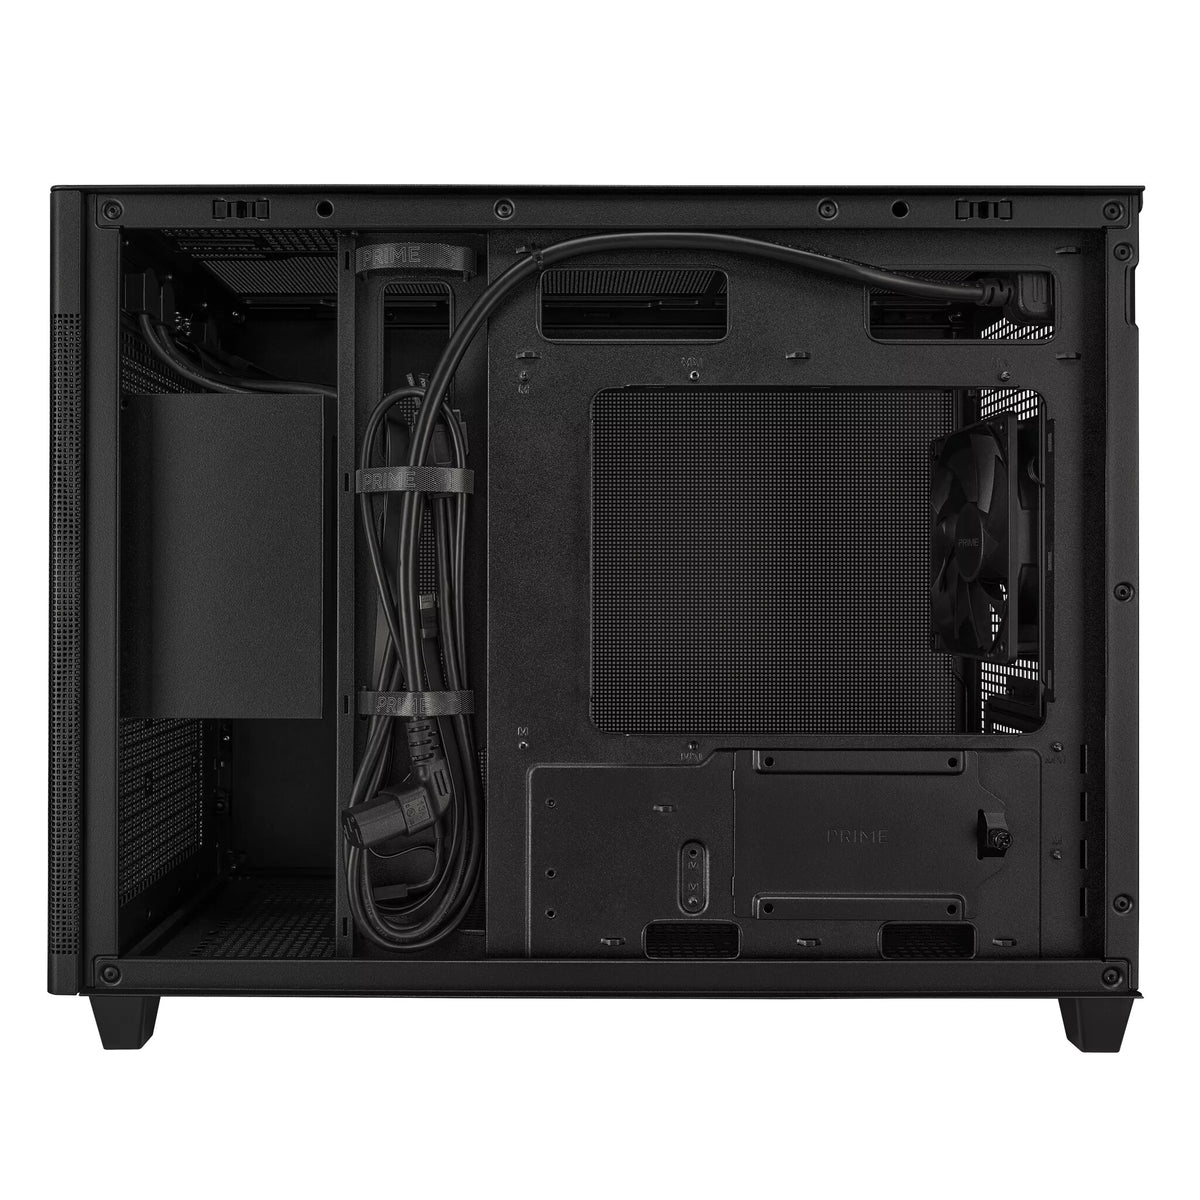 Asus Prime AP201 - MicroATX Mini Tower Case in Black